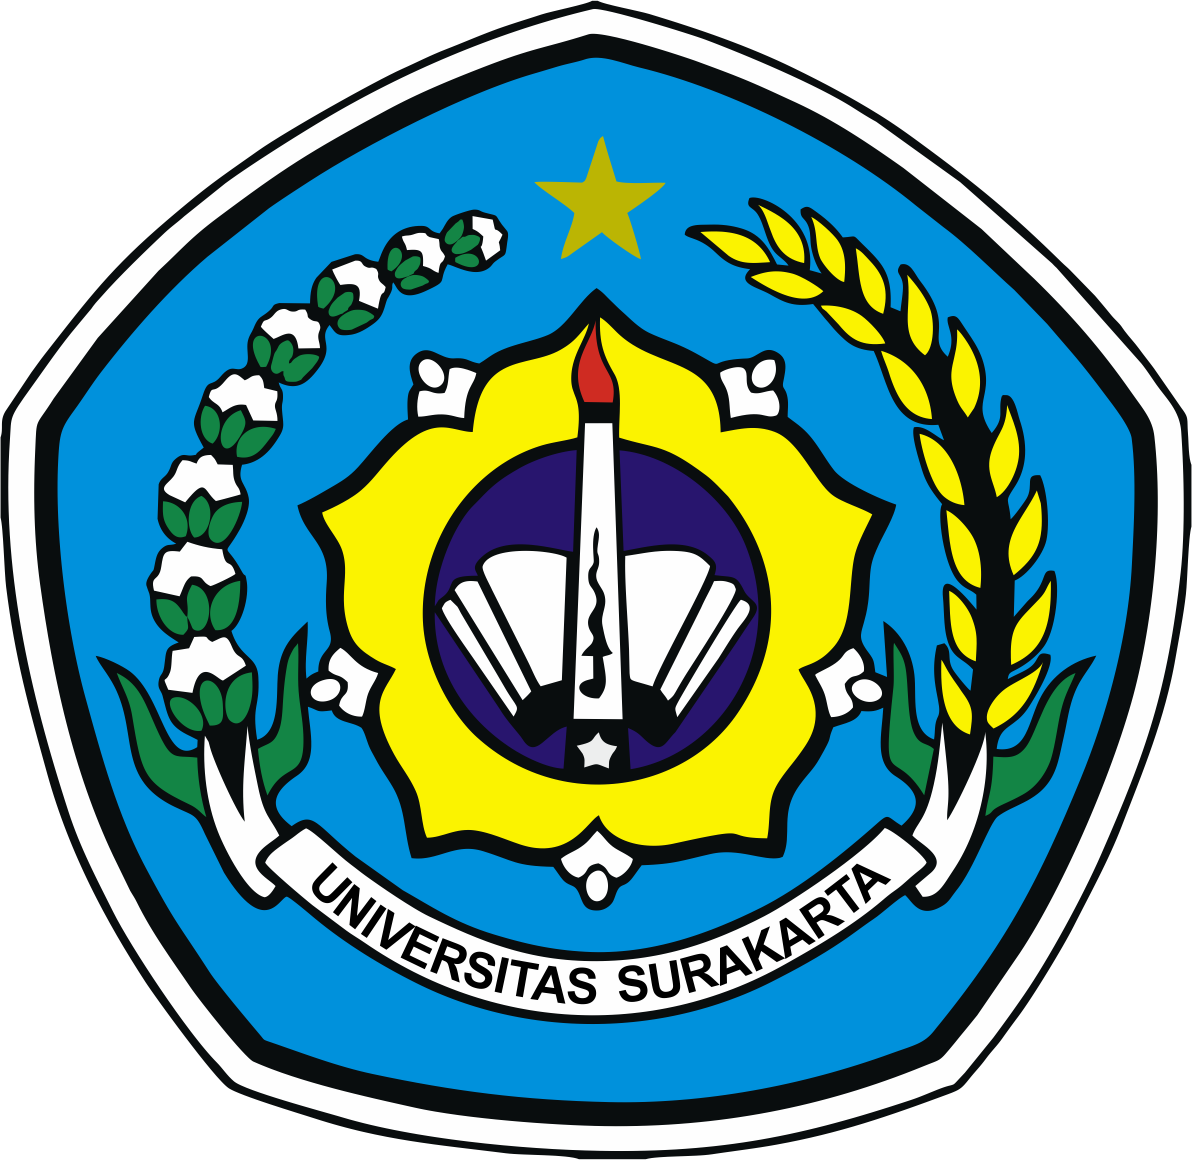 Universitas Surakarta